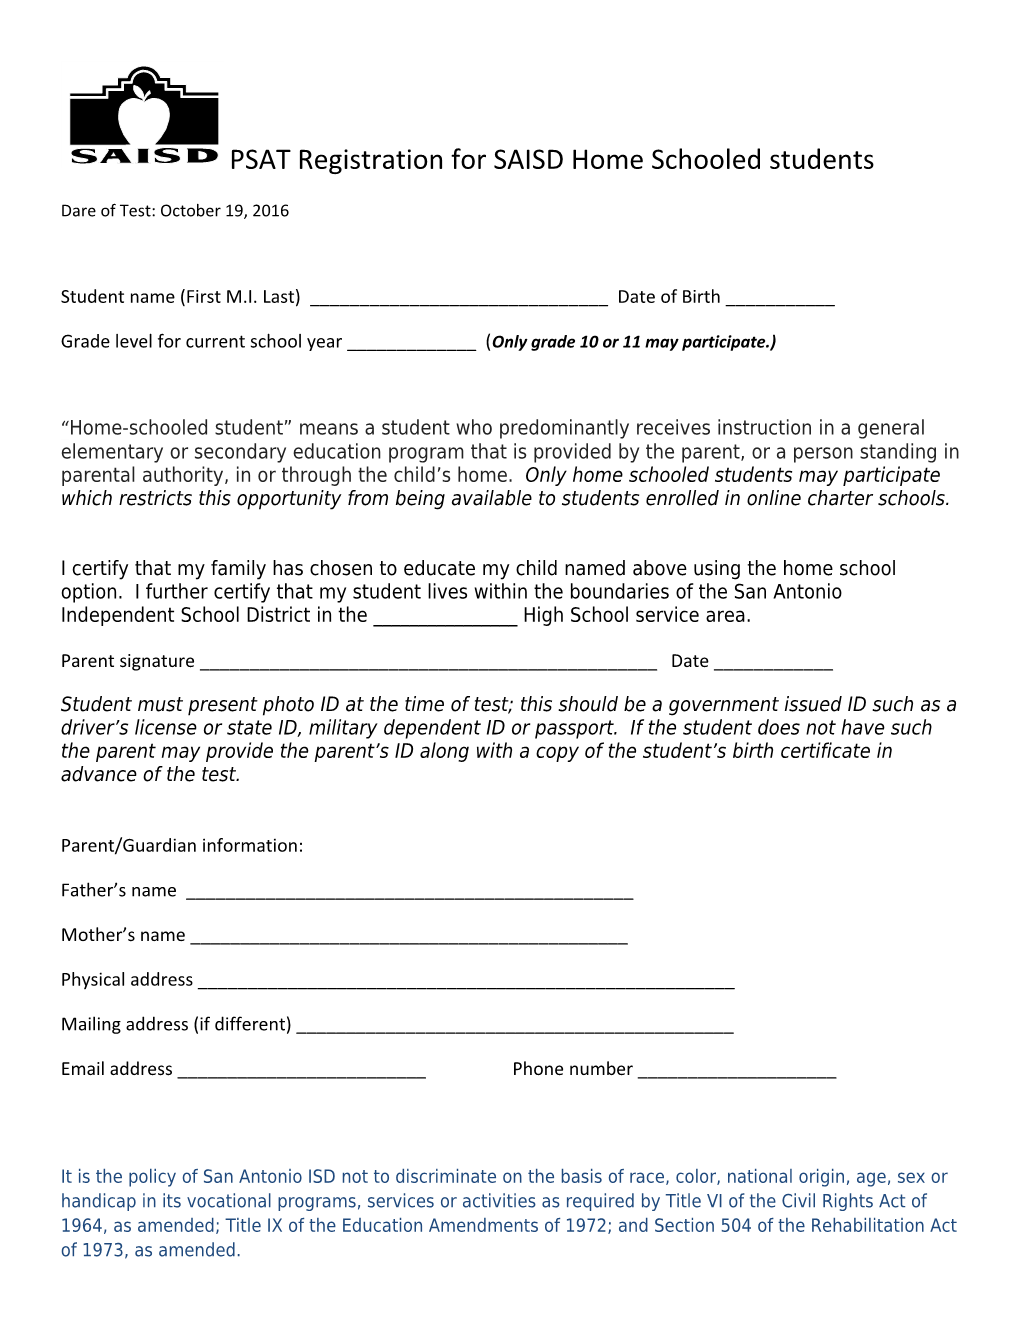 PSAT Registration for SAISD Home Schooled Students